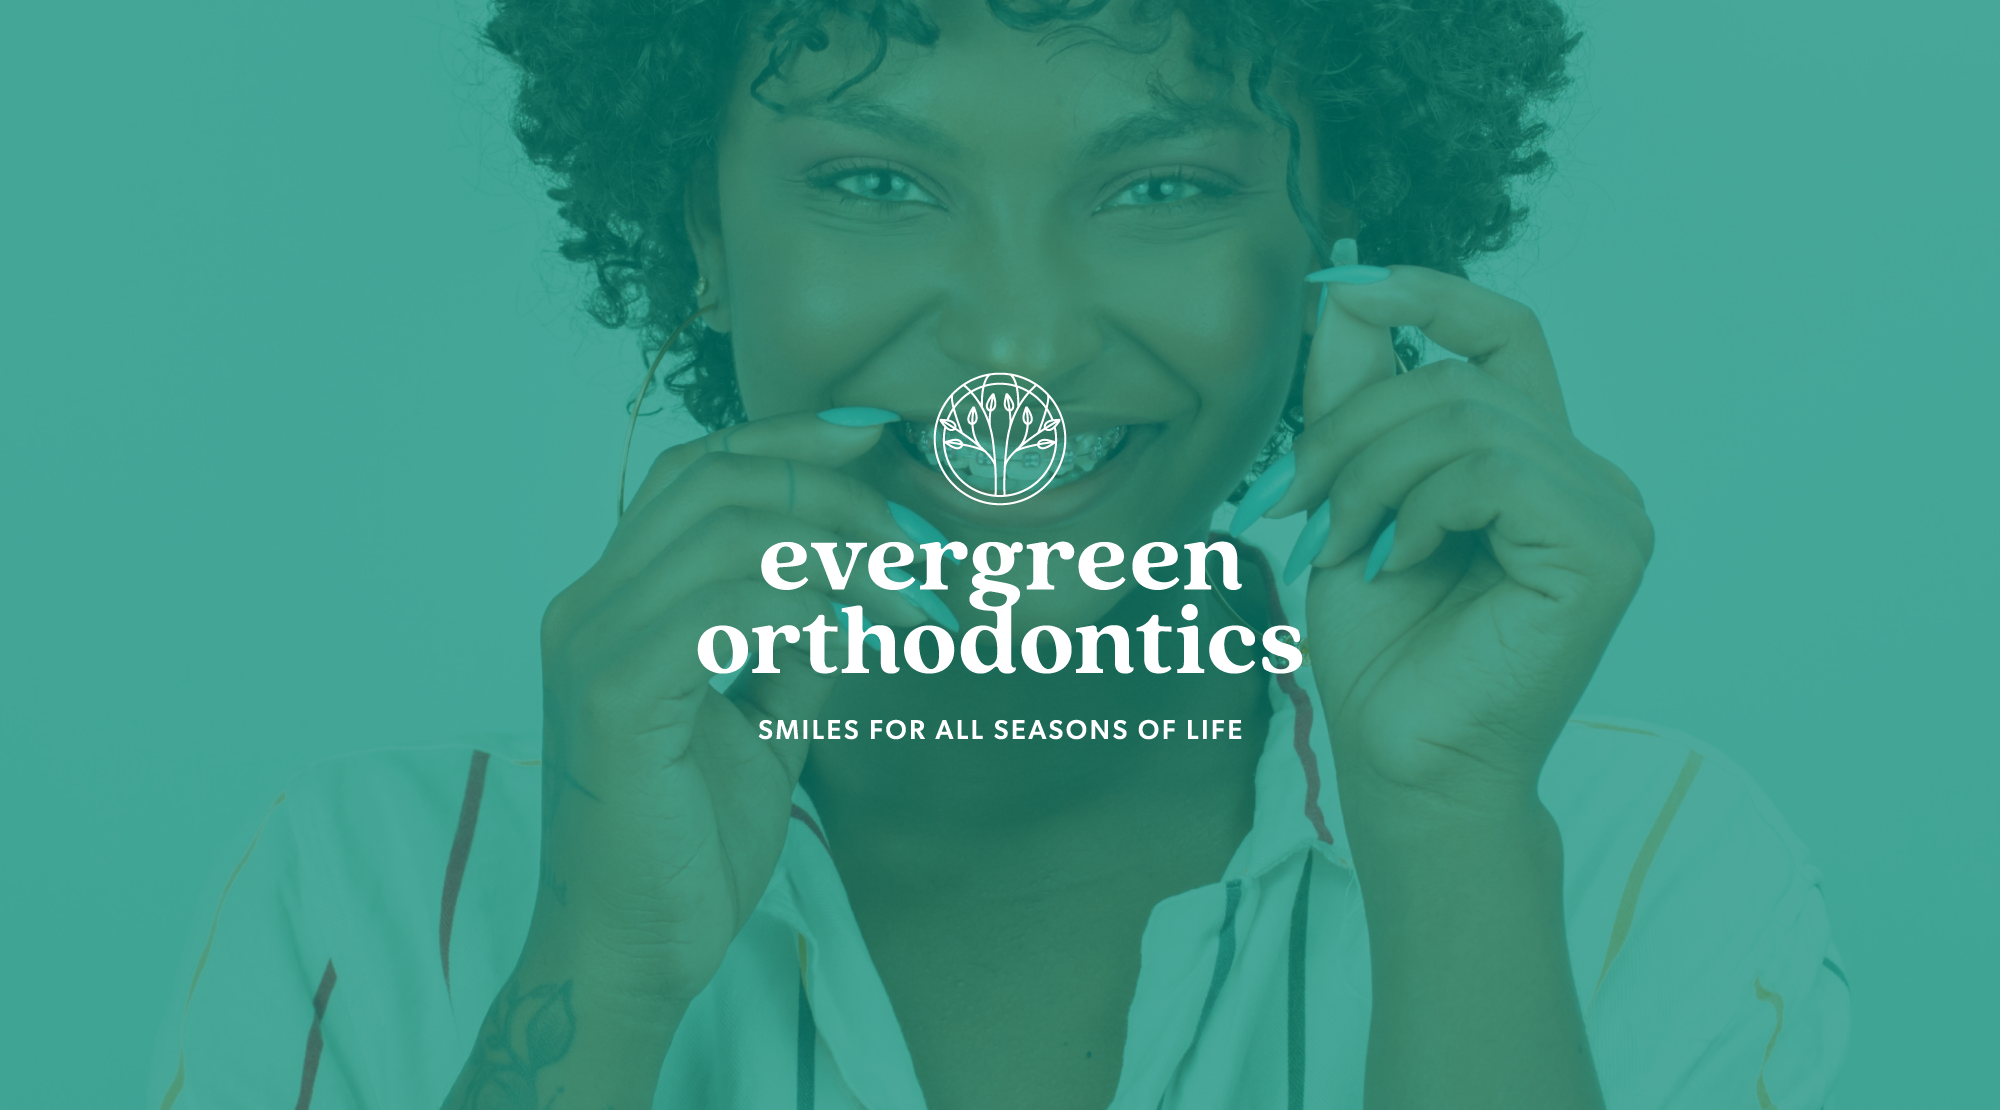 Fun Orthodontist Brand Design for Evergreen Orthodontics